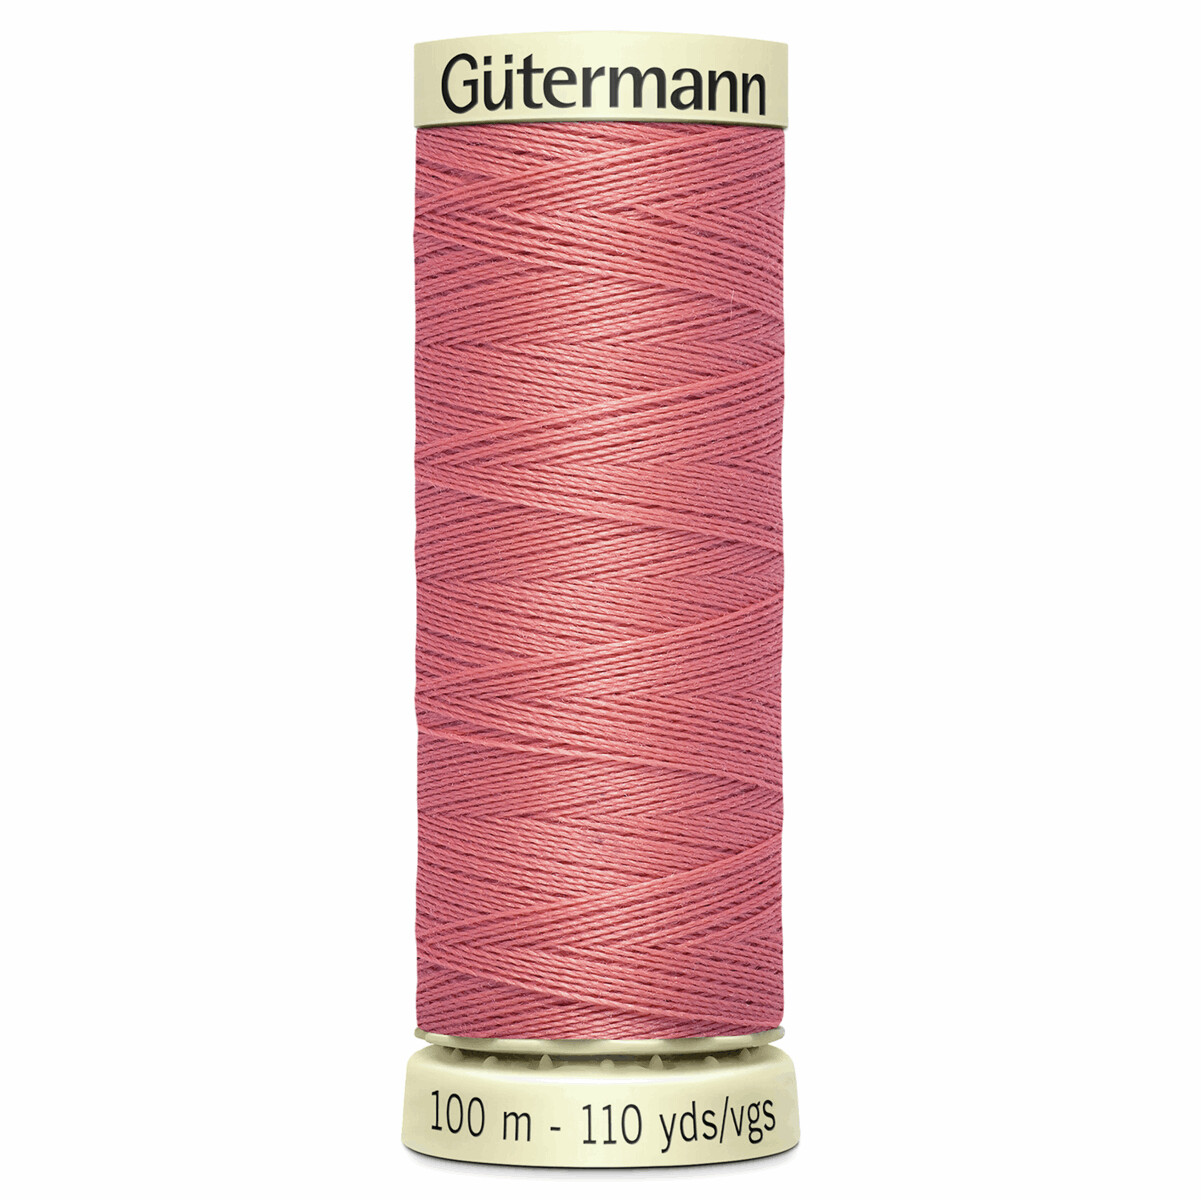 Gutermann Sew-All thread 80